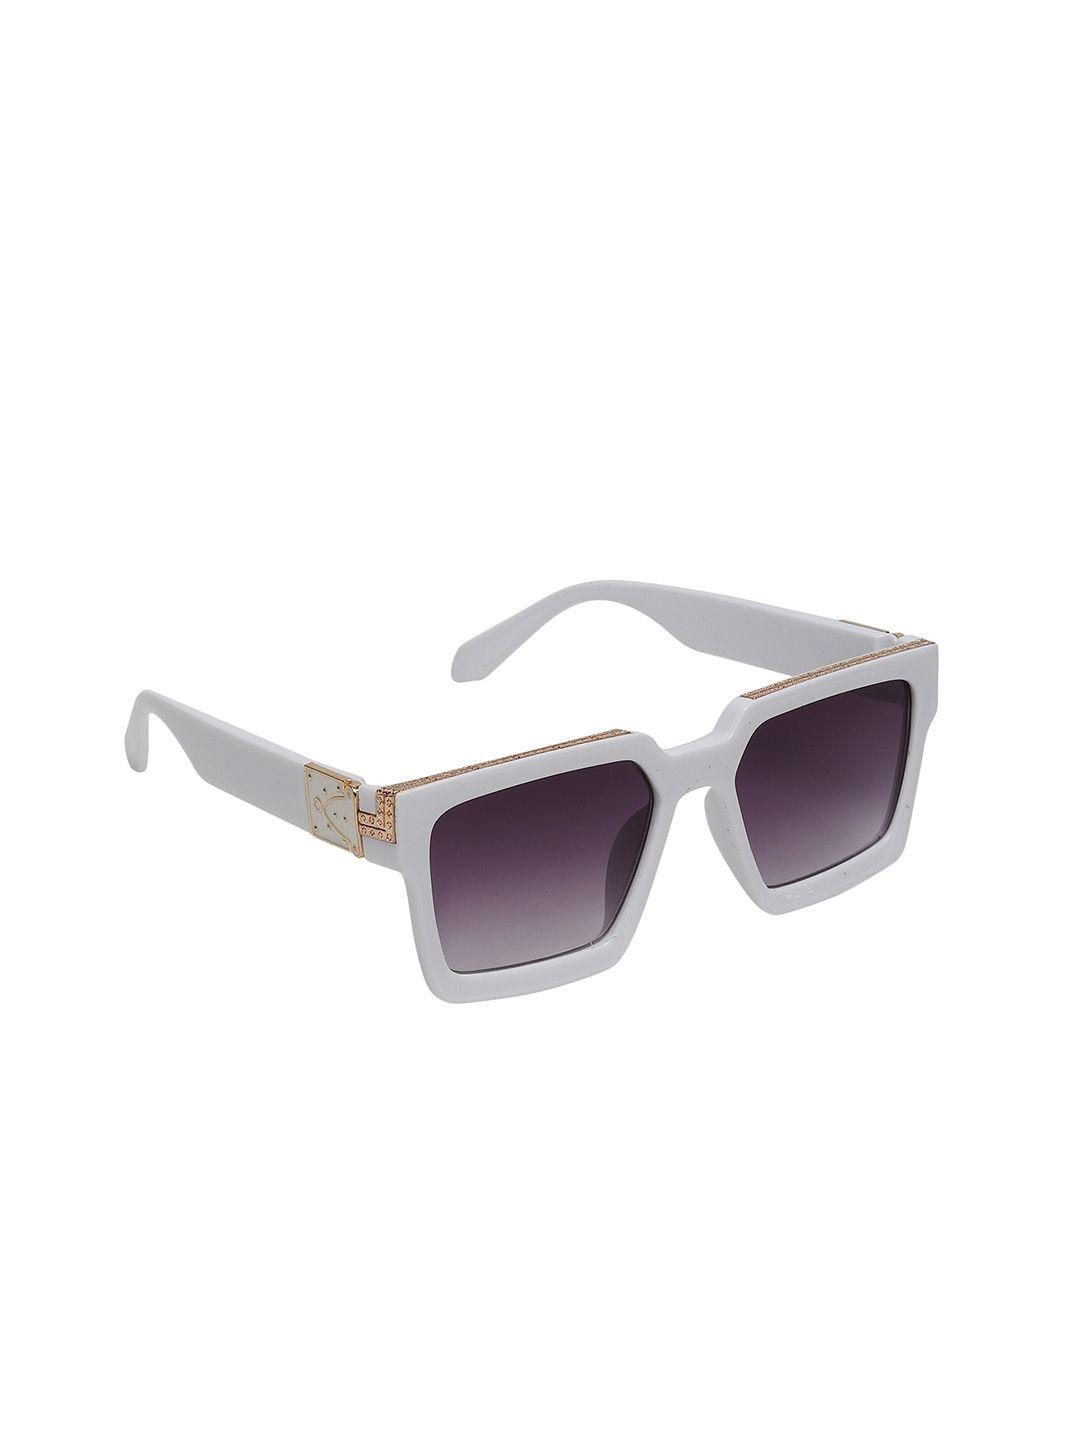 celebrity sunglasses unisex purple lens & white wayfarer sunglasses cl-eddy-jass-01